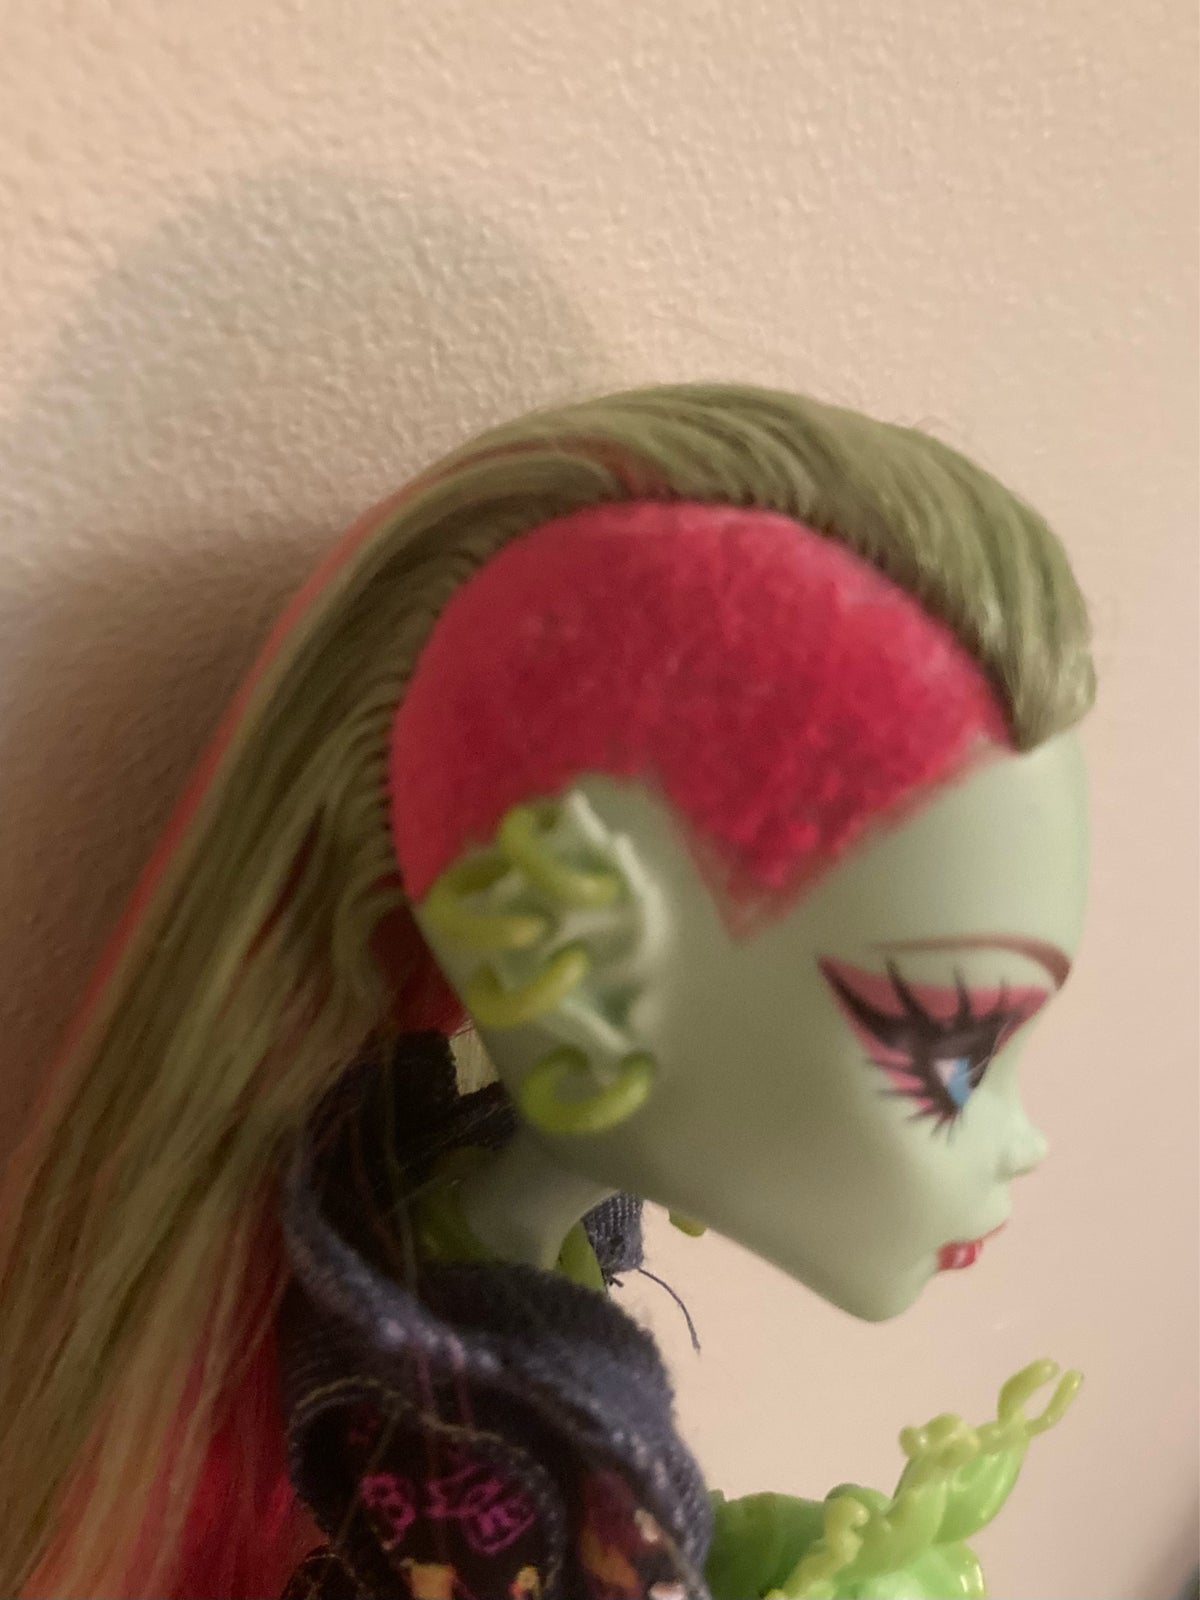 Barbie, Monster High Venus McFlytrap